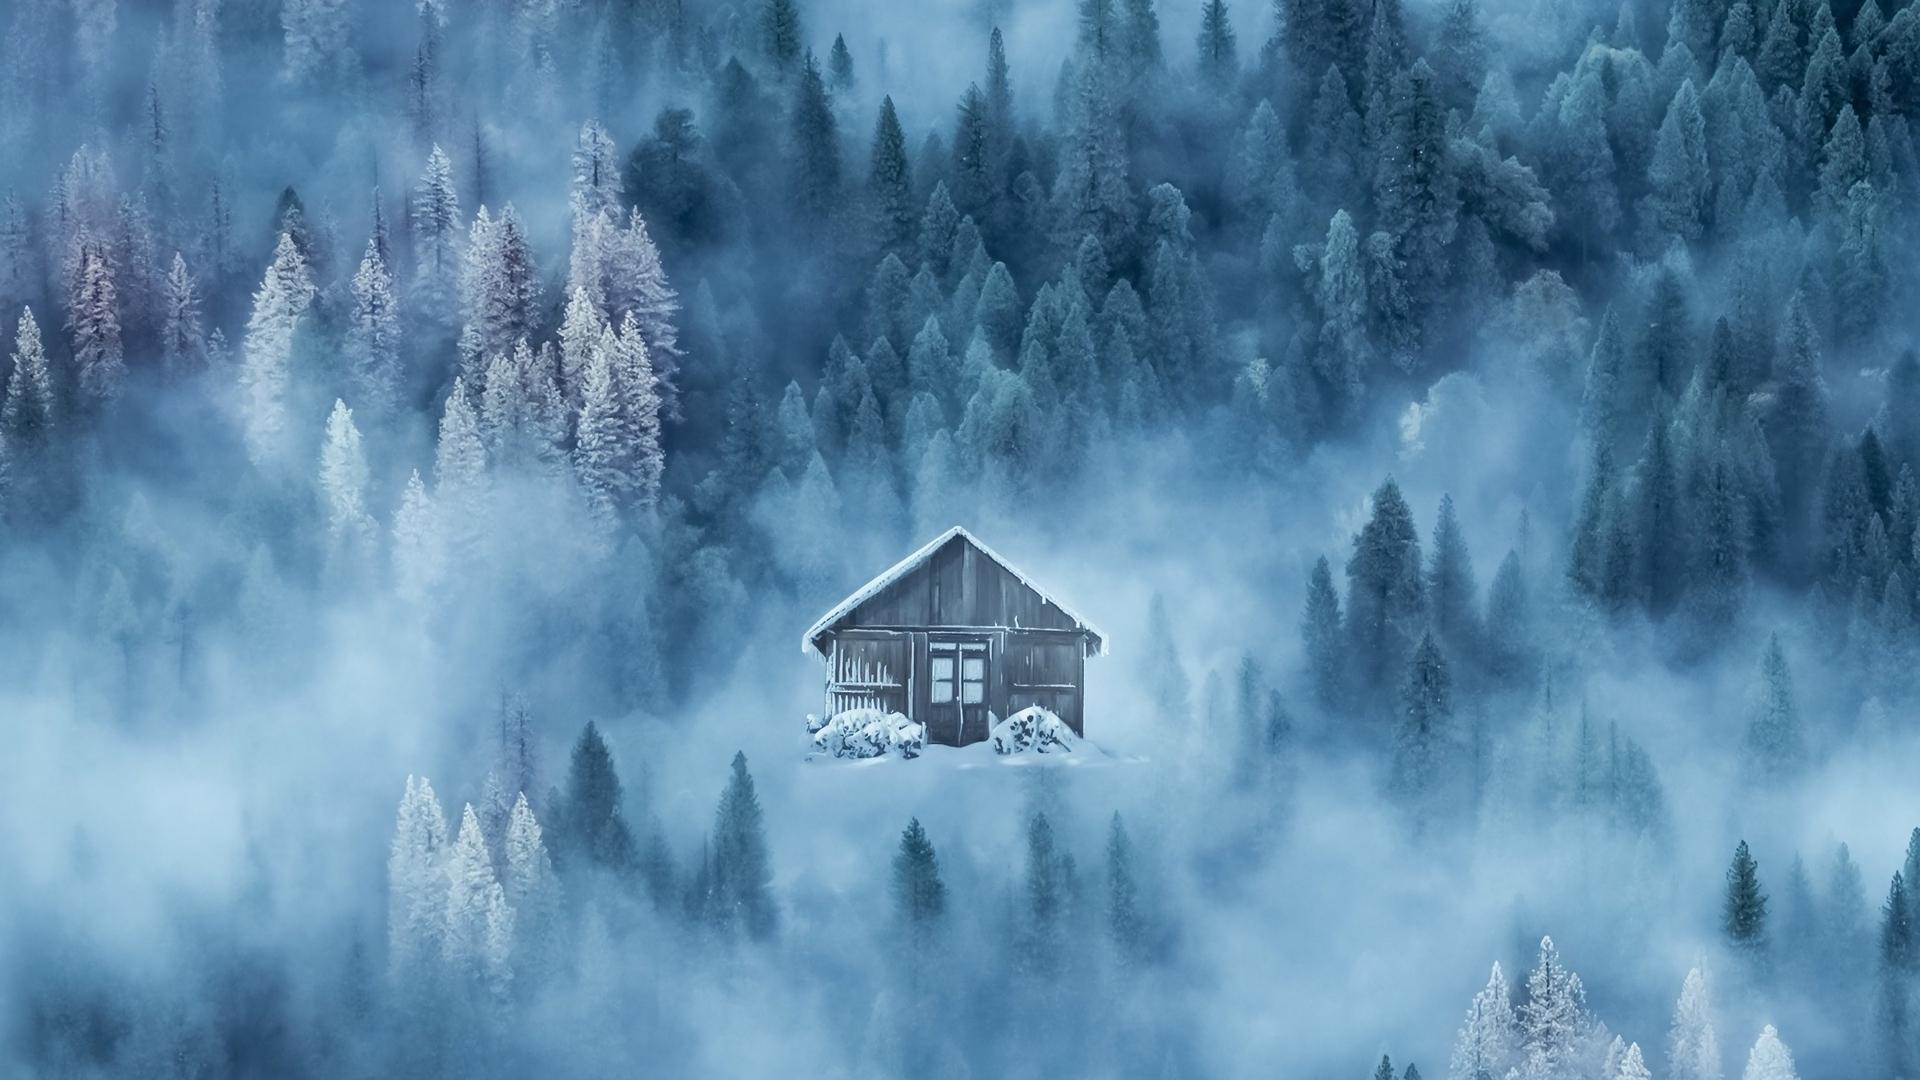 Download wallpaper 1920x1080 house, fog, snow, winter, forest full